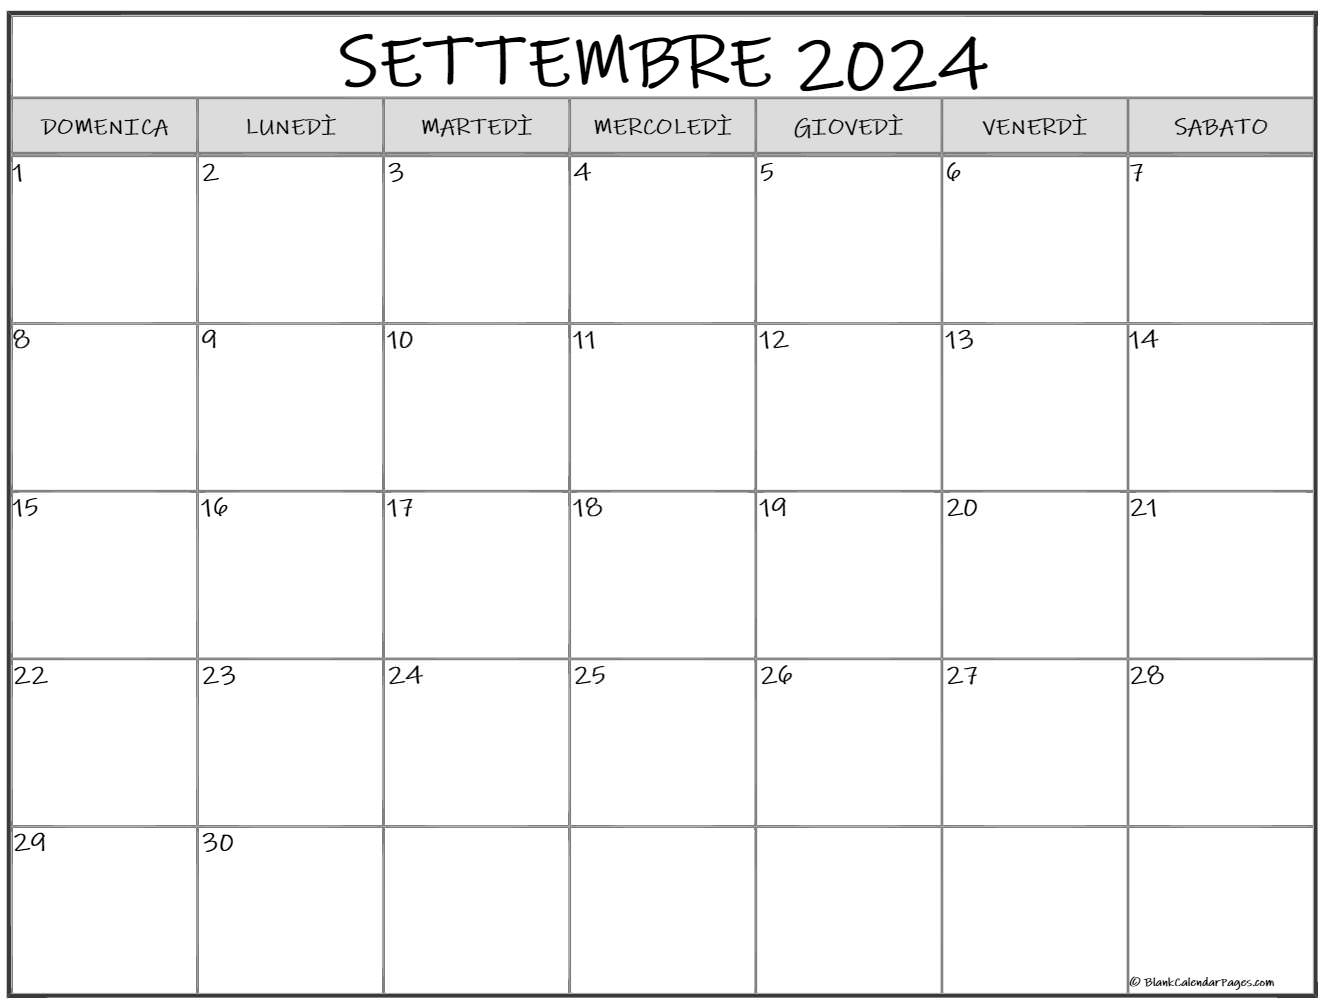 Settembre 2022 Calendario Gratis Italiano Calendario Settembre